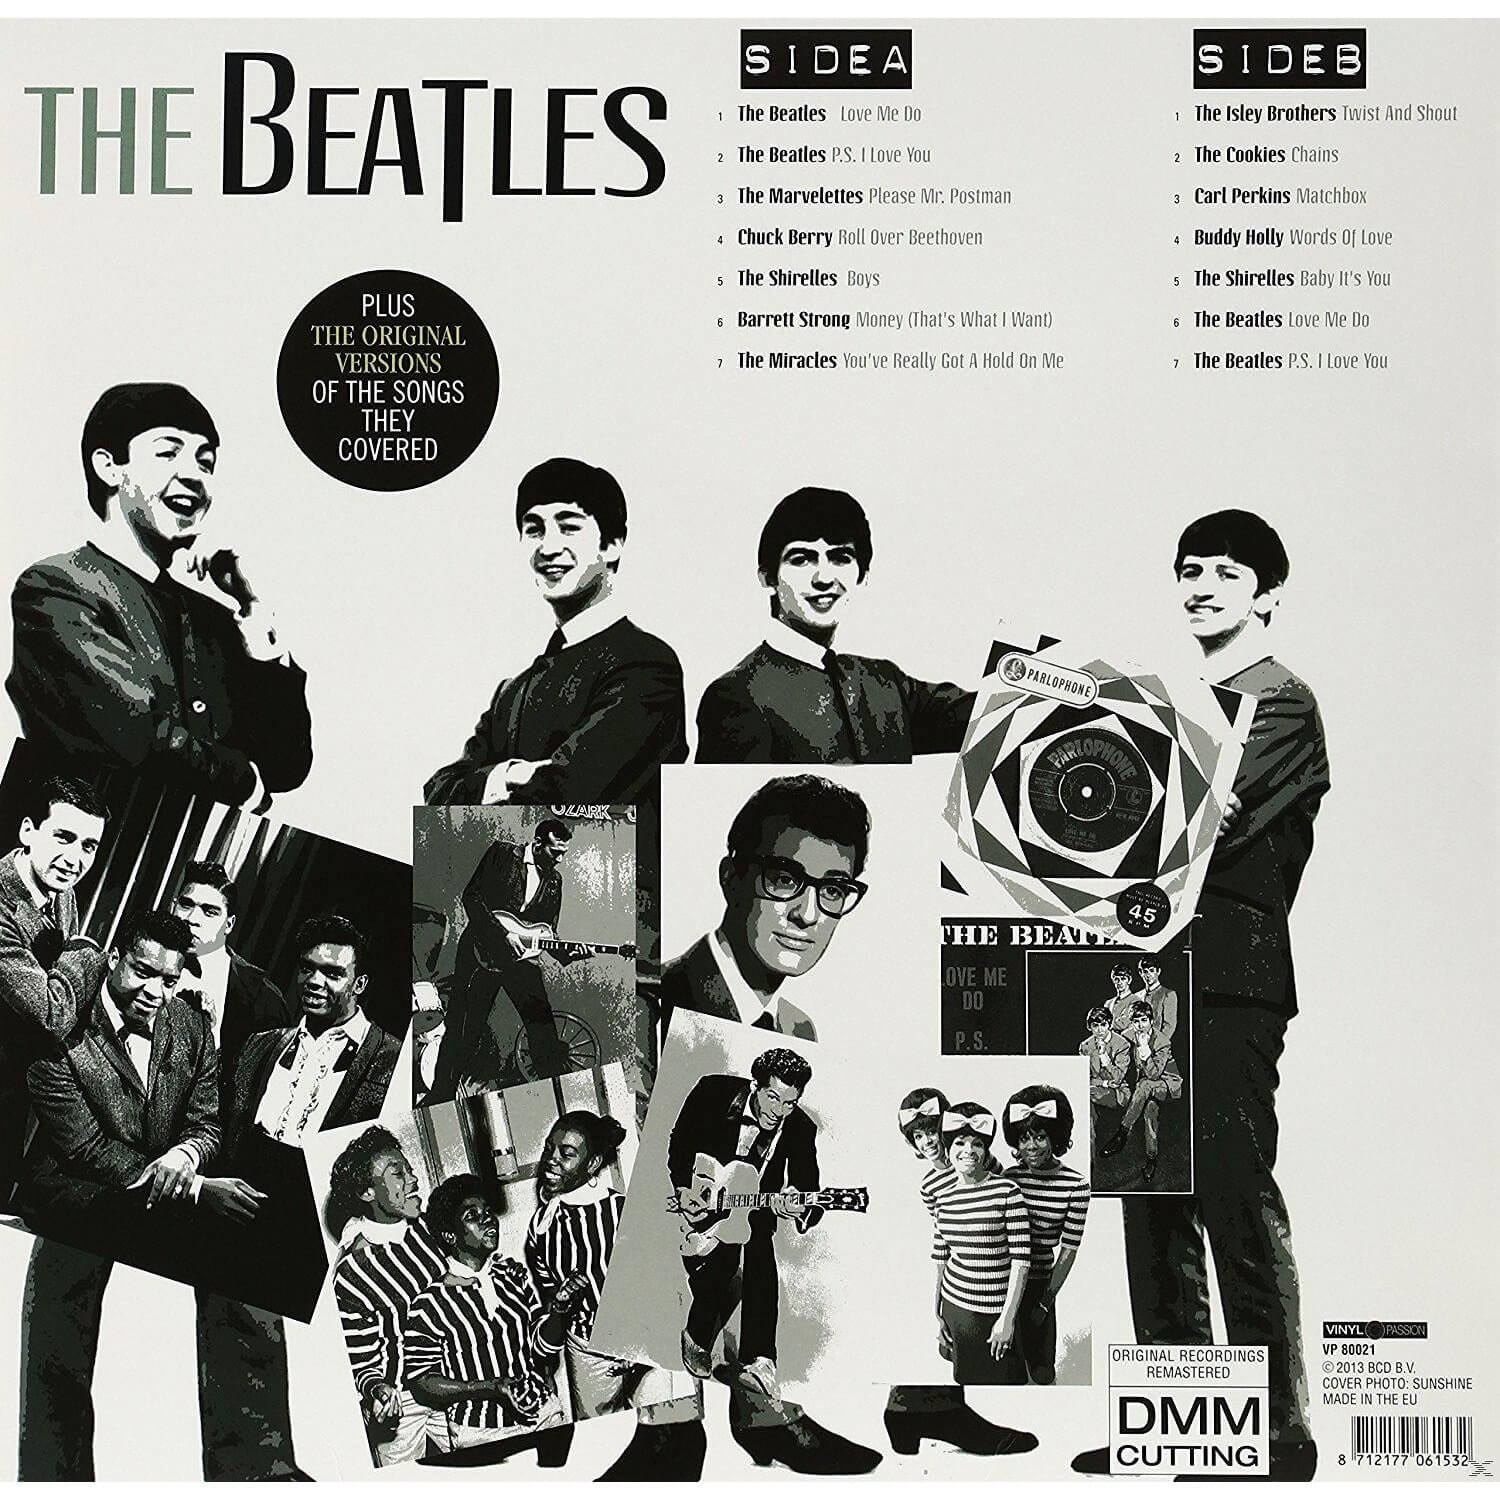 Cover beatles. Обложки пластинок Beatles. Beatles Love me do сингл. Битлз альбомы на пластинках. The Beatles album обложка.